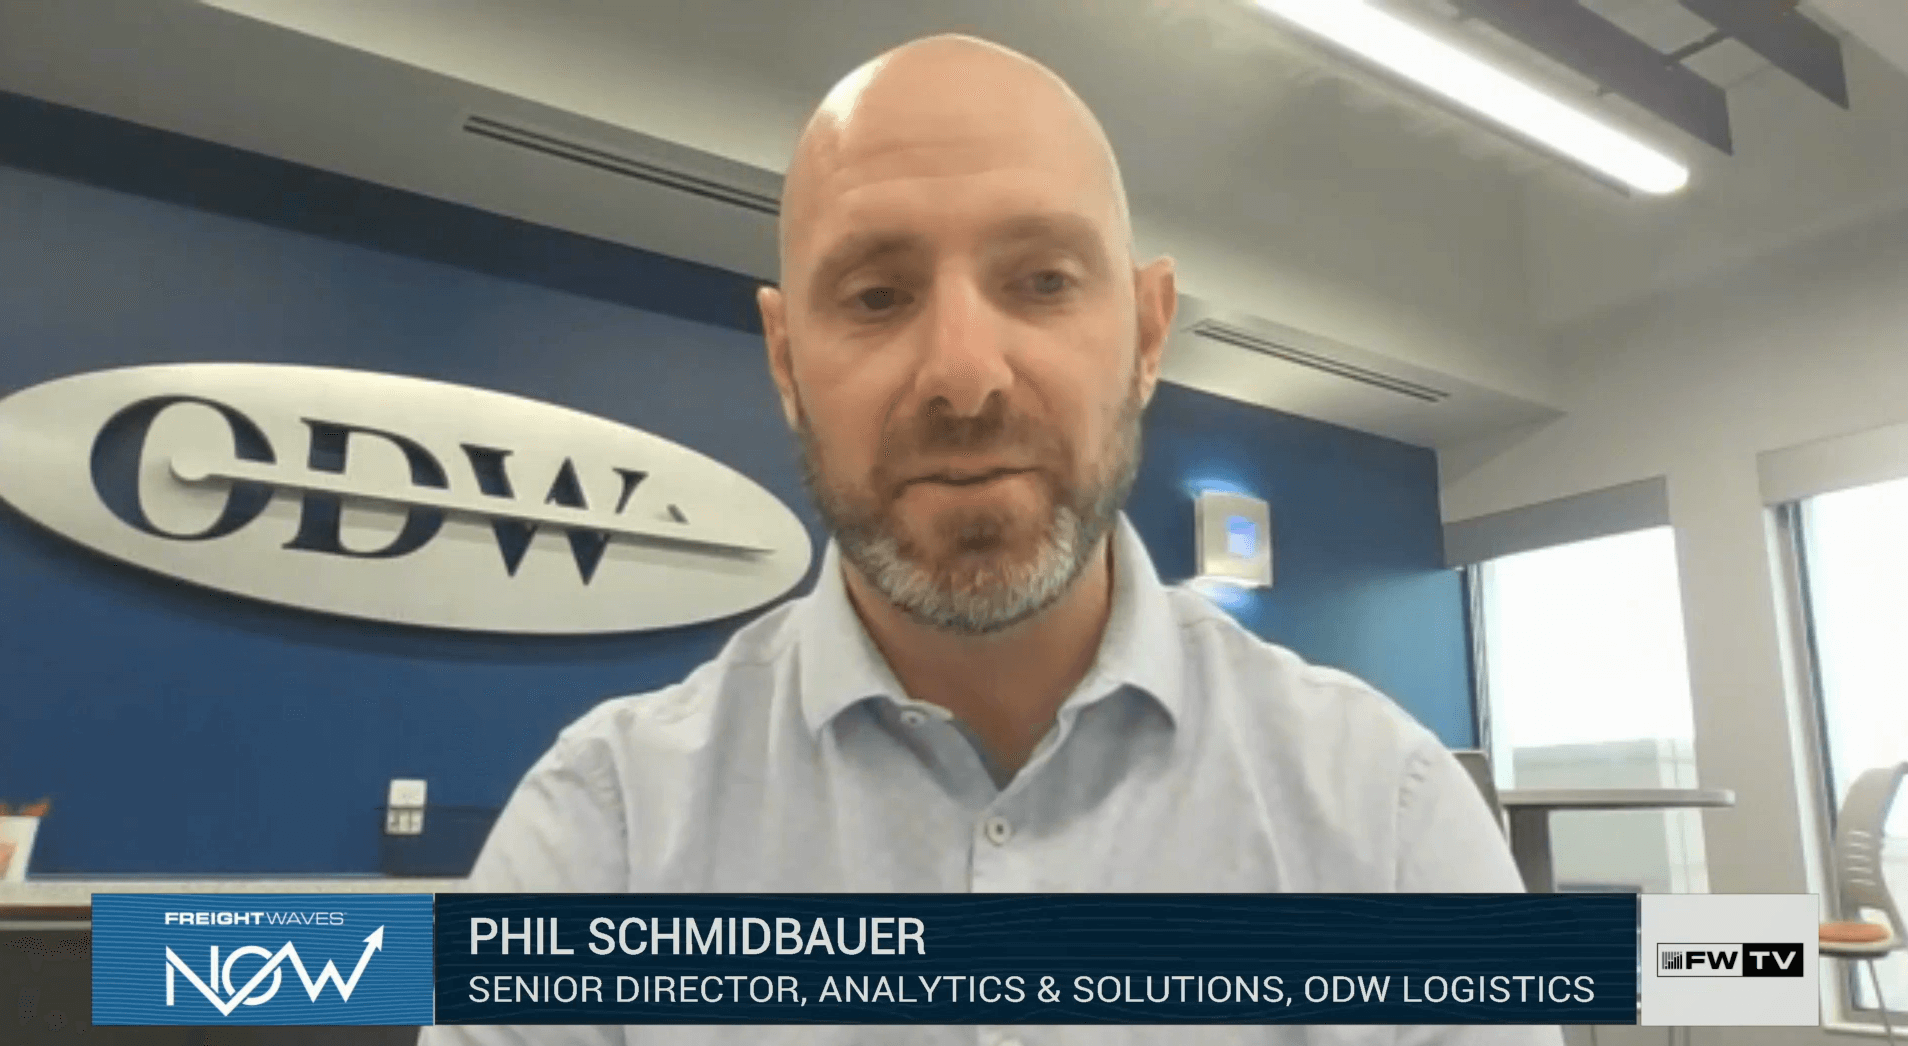 Phil Schmidbauer speaking